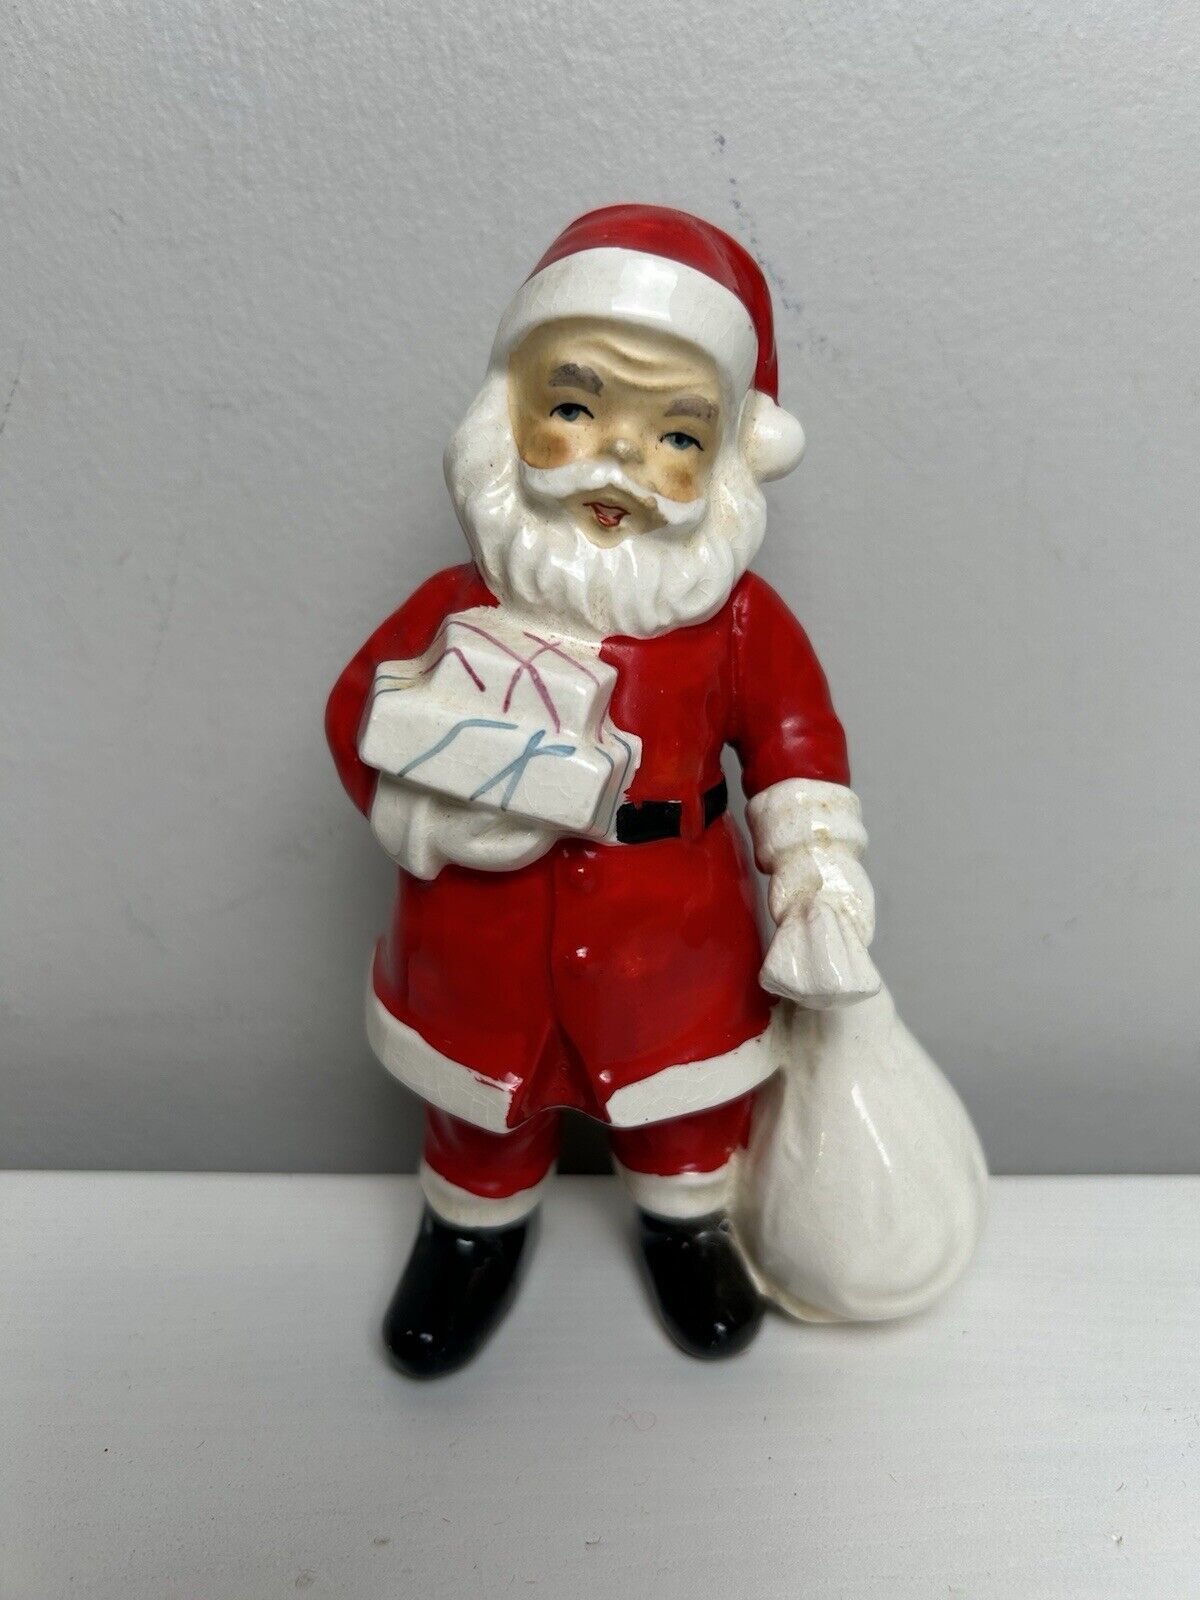 VTG Painted Ceramic Santa Claus Christmas Figurine Japan Blue Eyes Presents Flat